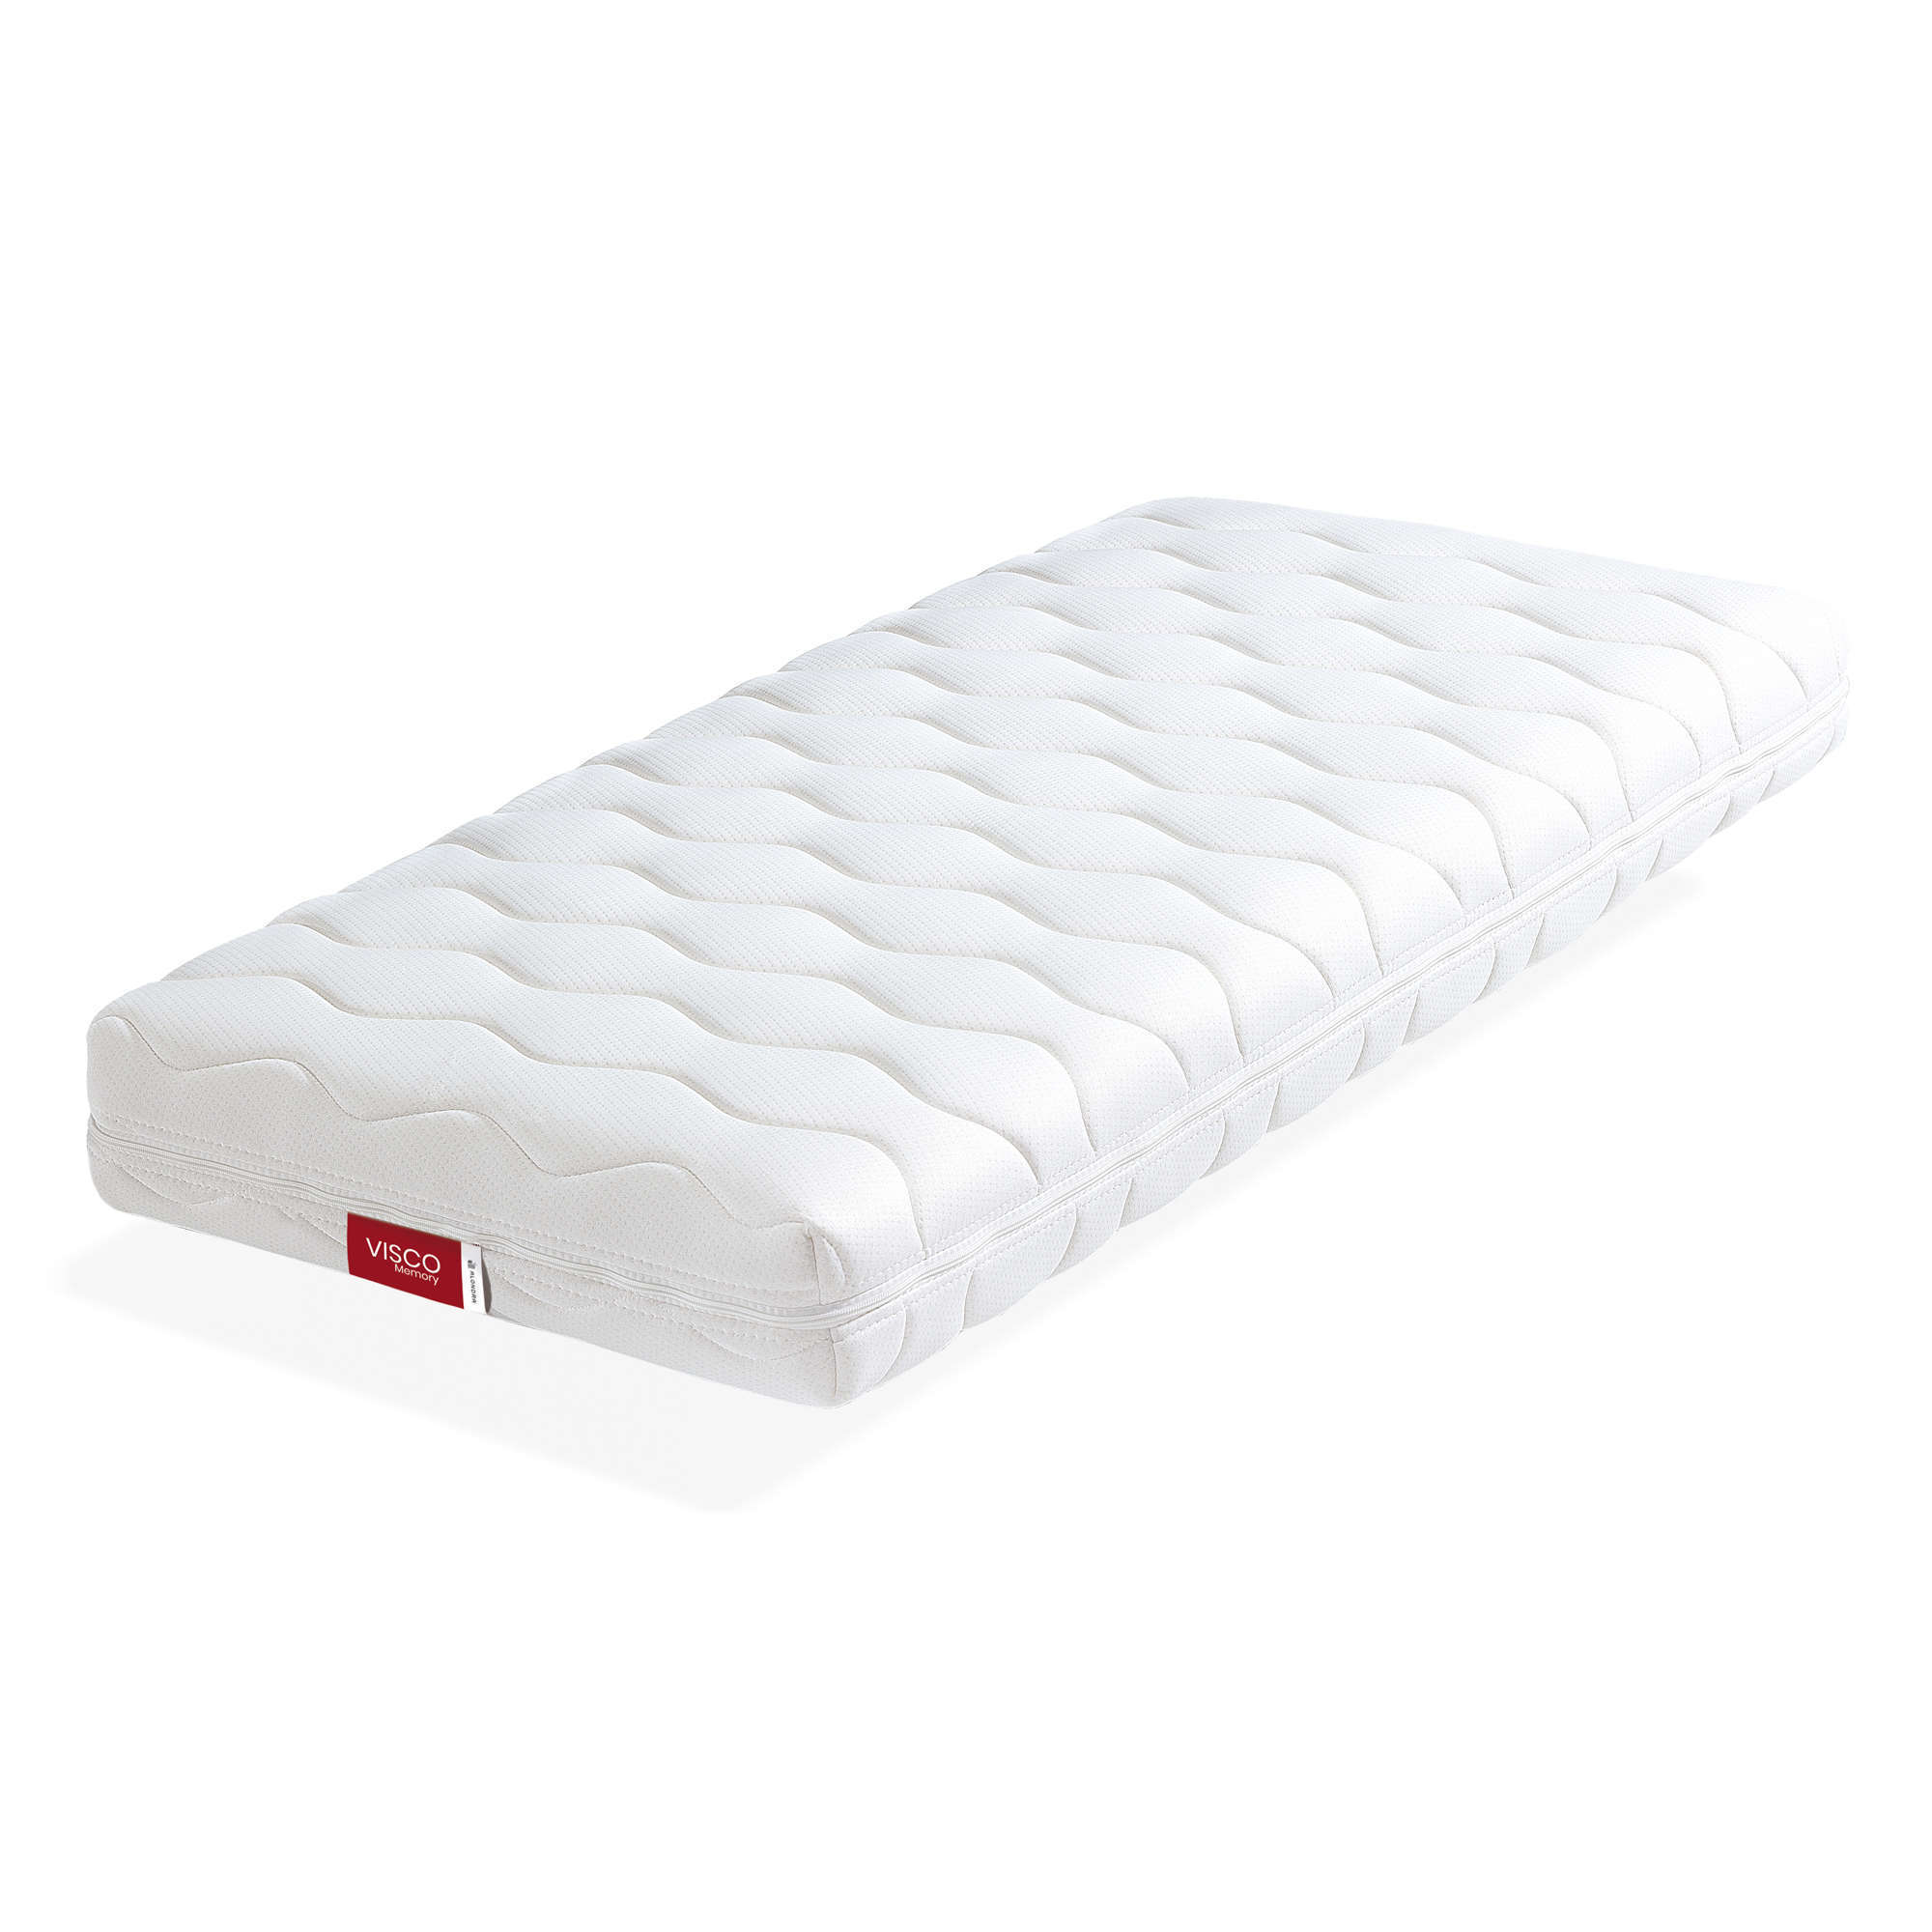 Memory foam mattress for cot 60x120cm